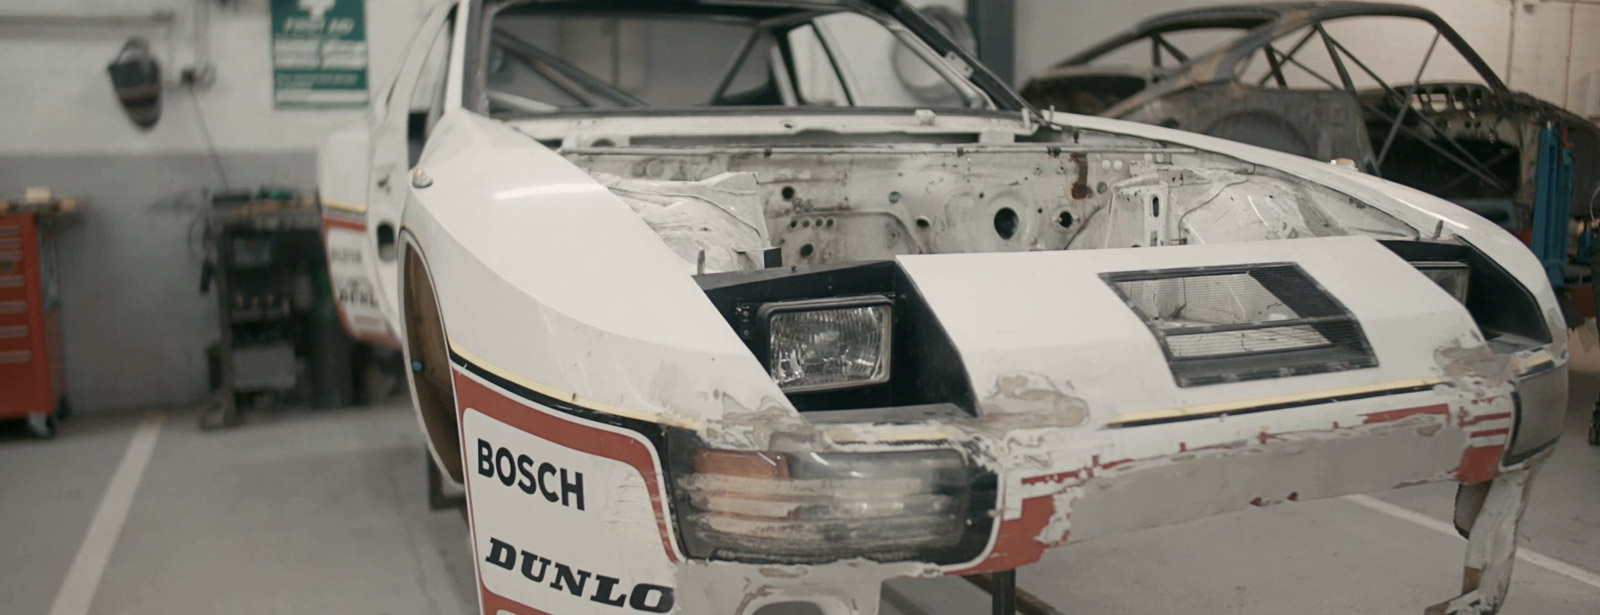 Porsche Cars GB - 924 GTP Restoration